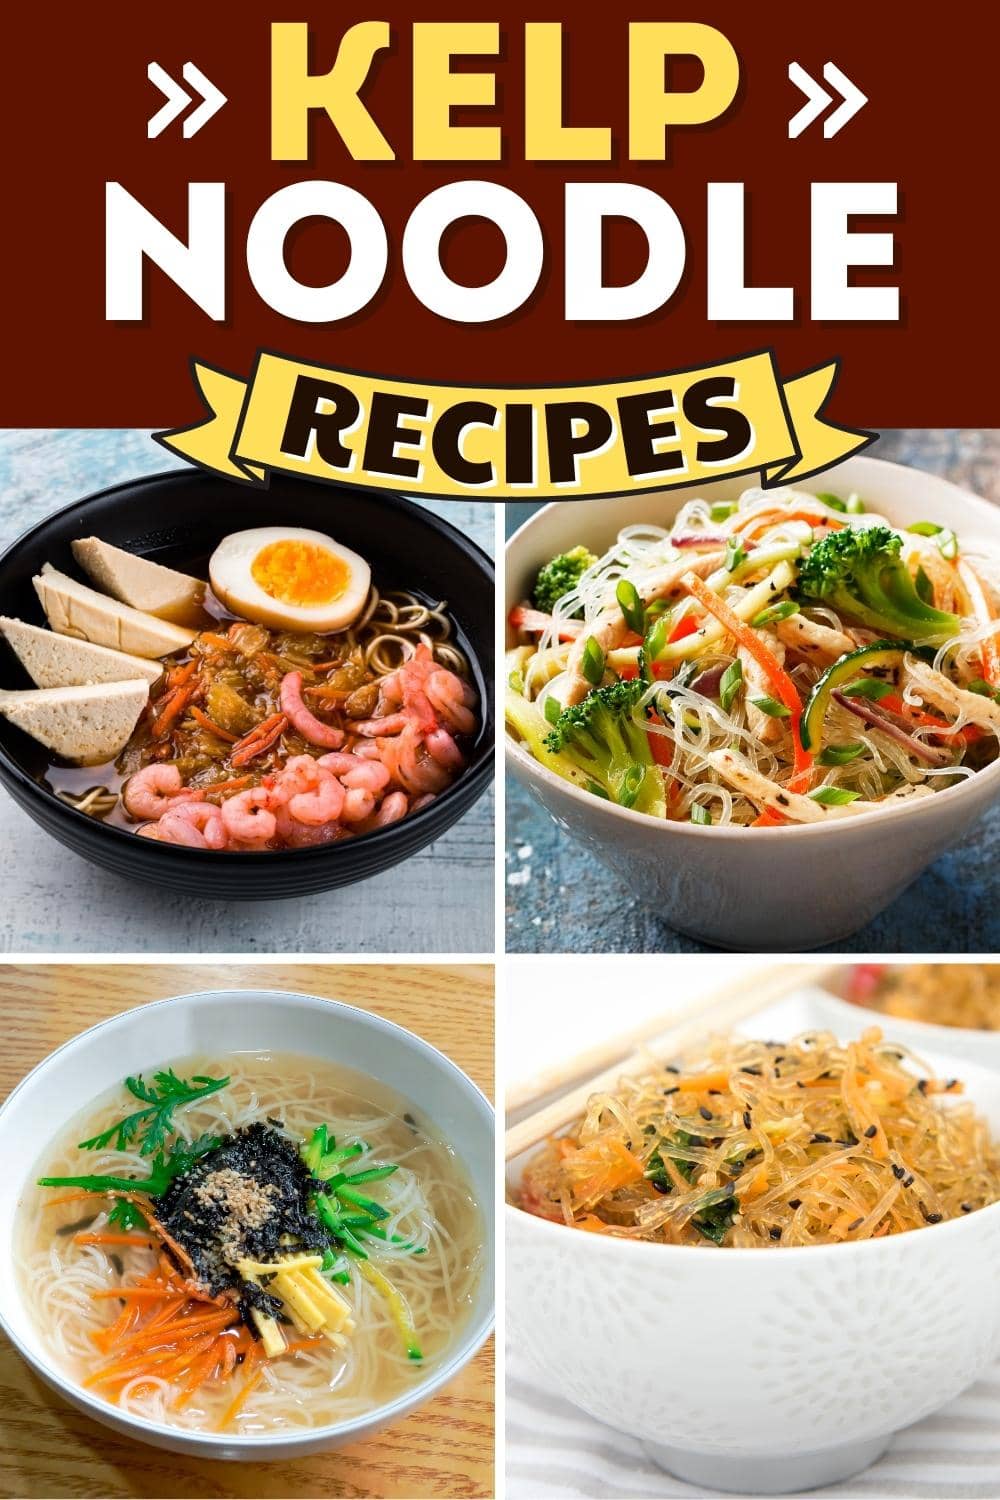 23 BEST Kelp Noodle Recipes (+ Dinner Ideas) - Insanely Good